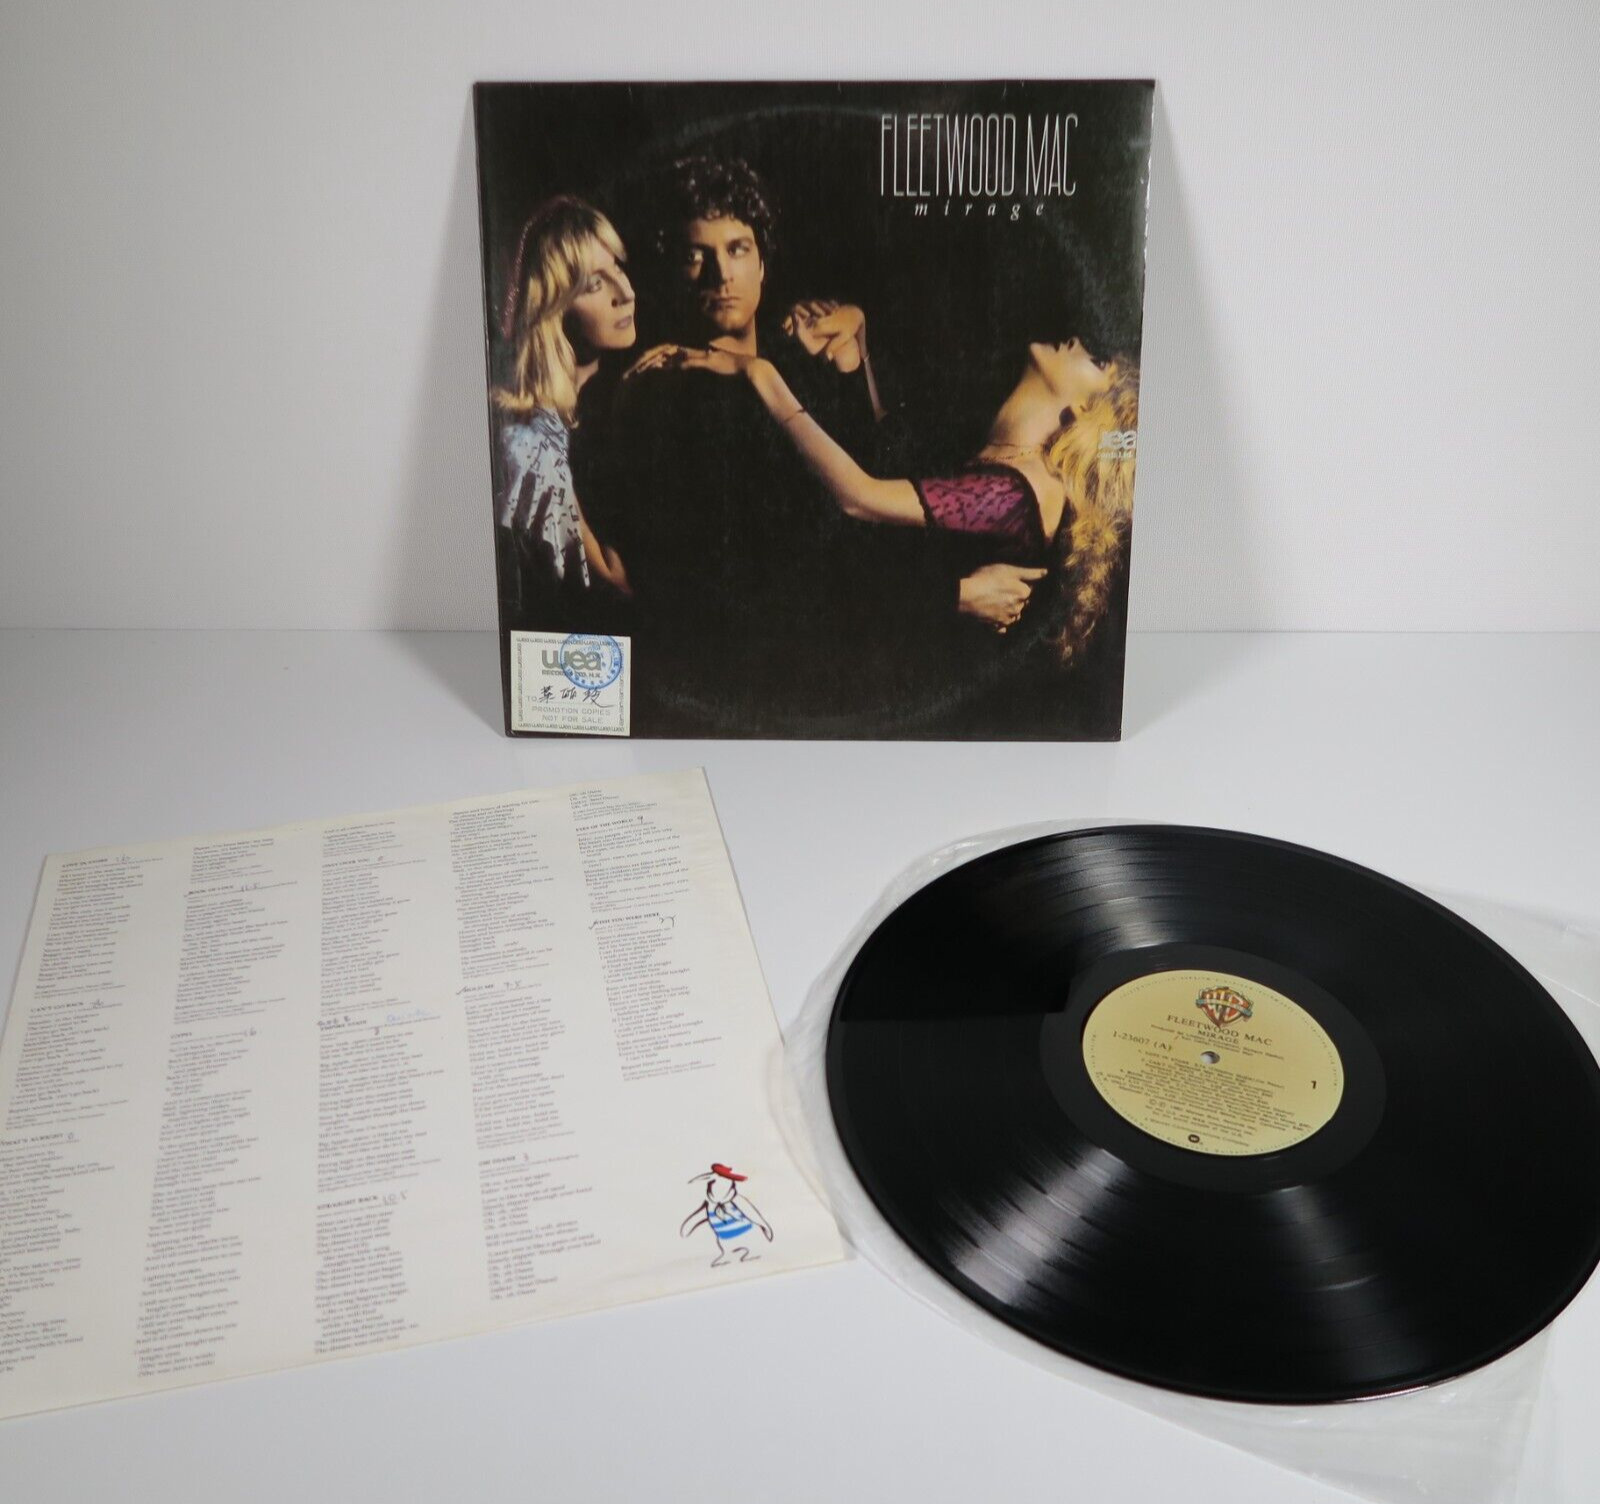 VTG 1982 Fleetwood Mac Mirage w/ Lyrics Sheet Warner Bros Records Vinyl Album LP